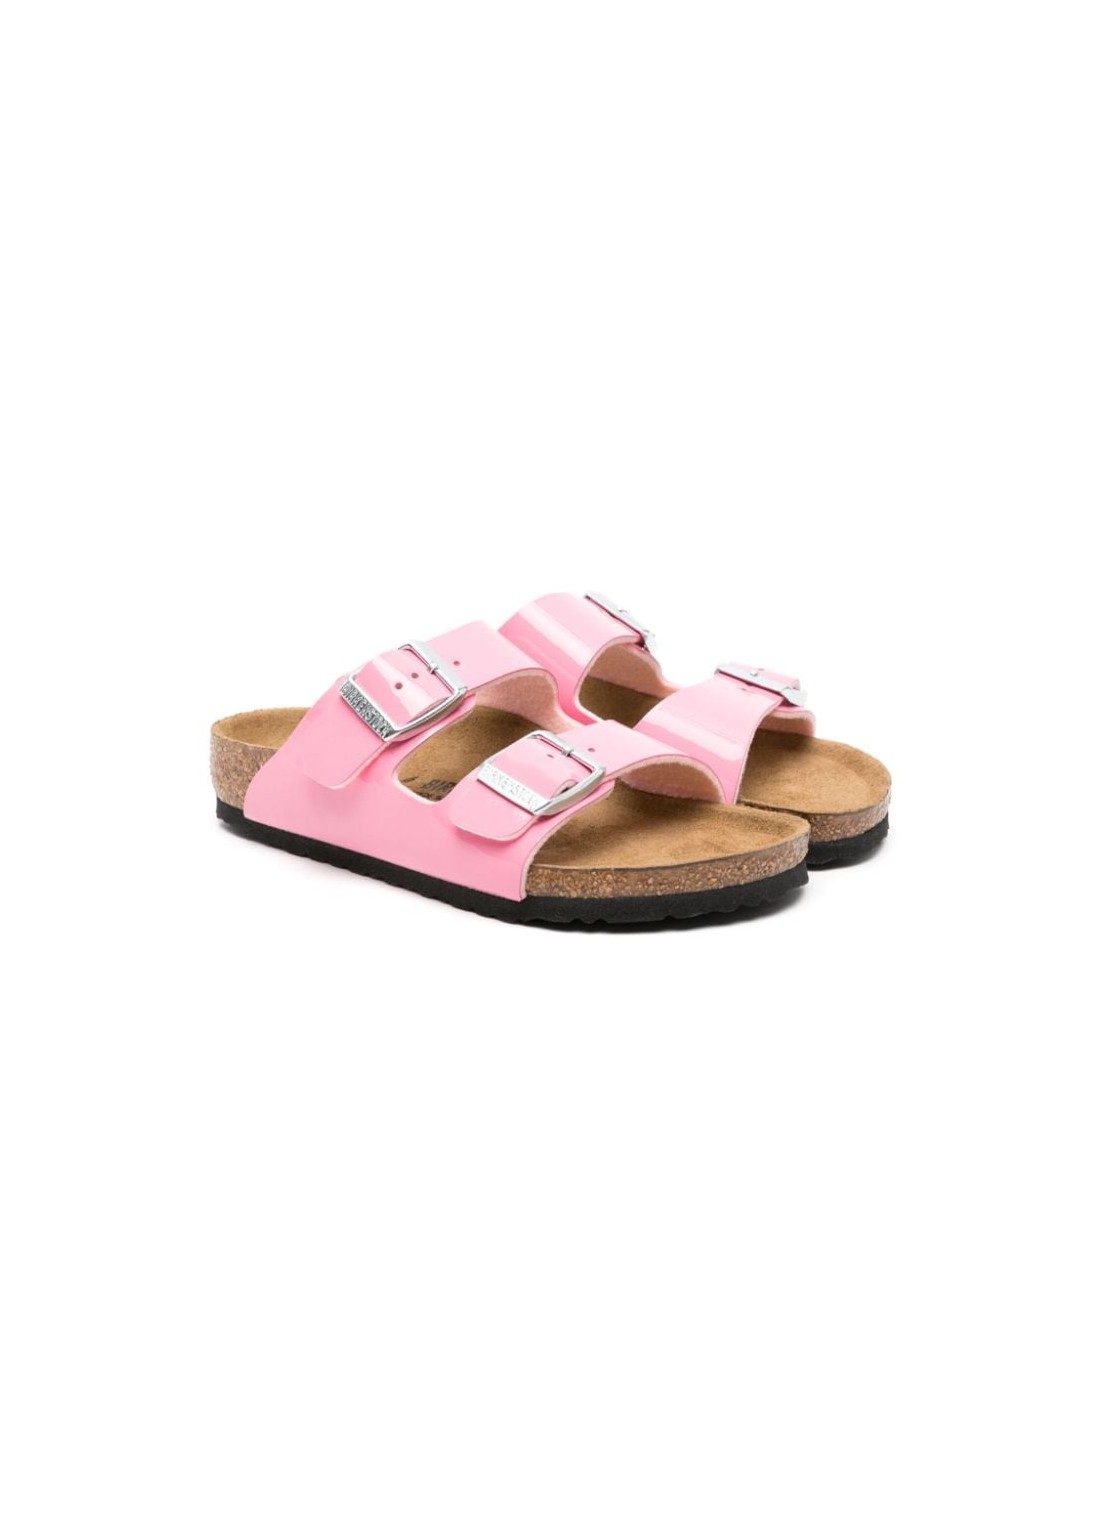 Sandalia birkenstock sandal manarizona kids bf - 1027133 patent candy pink talla 32
 